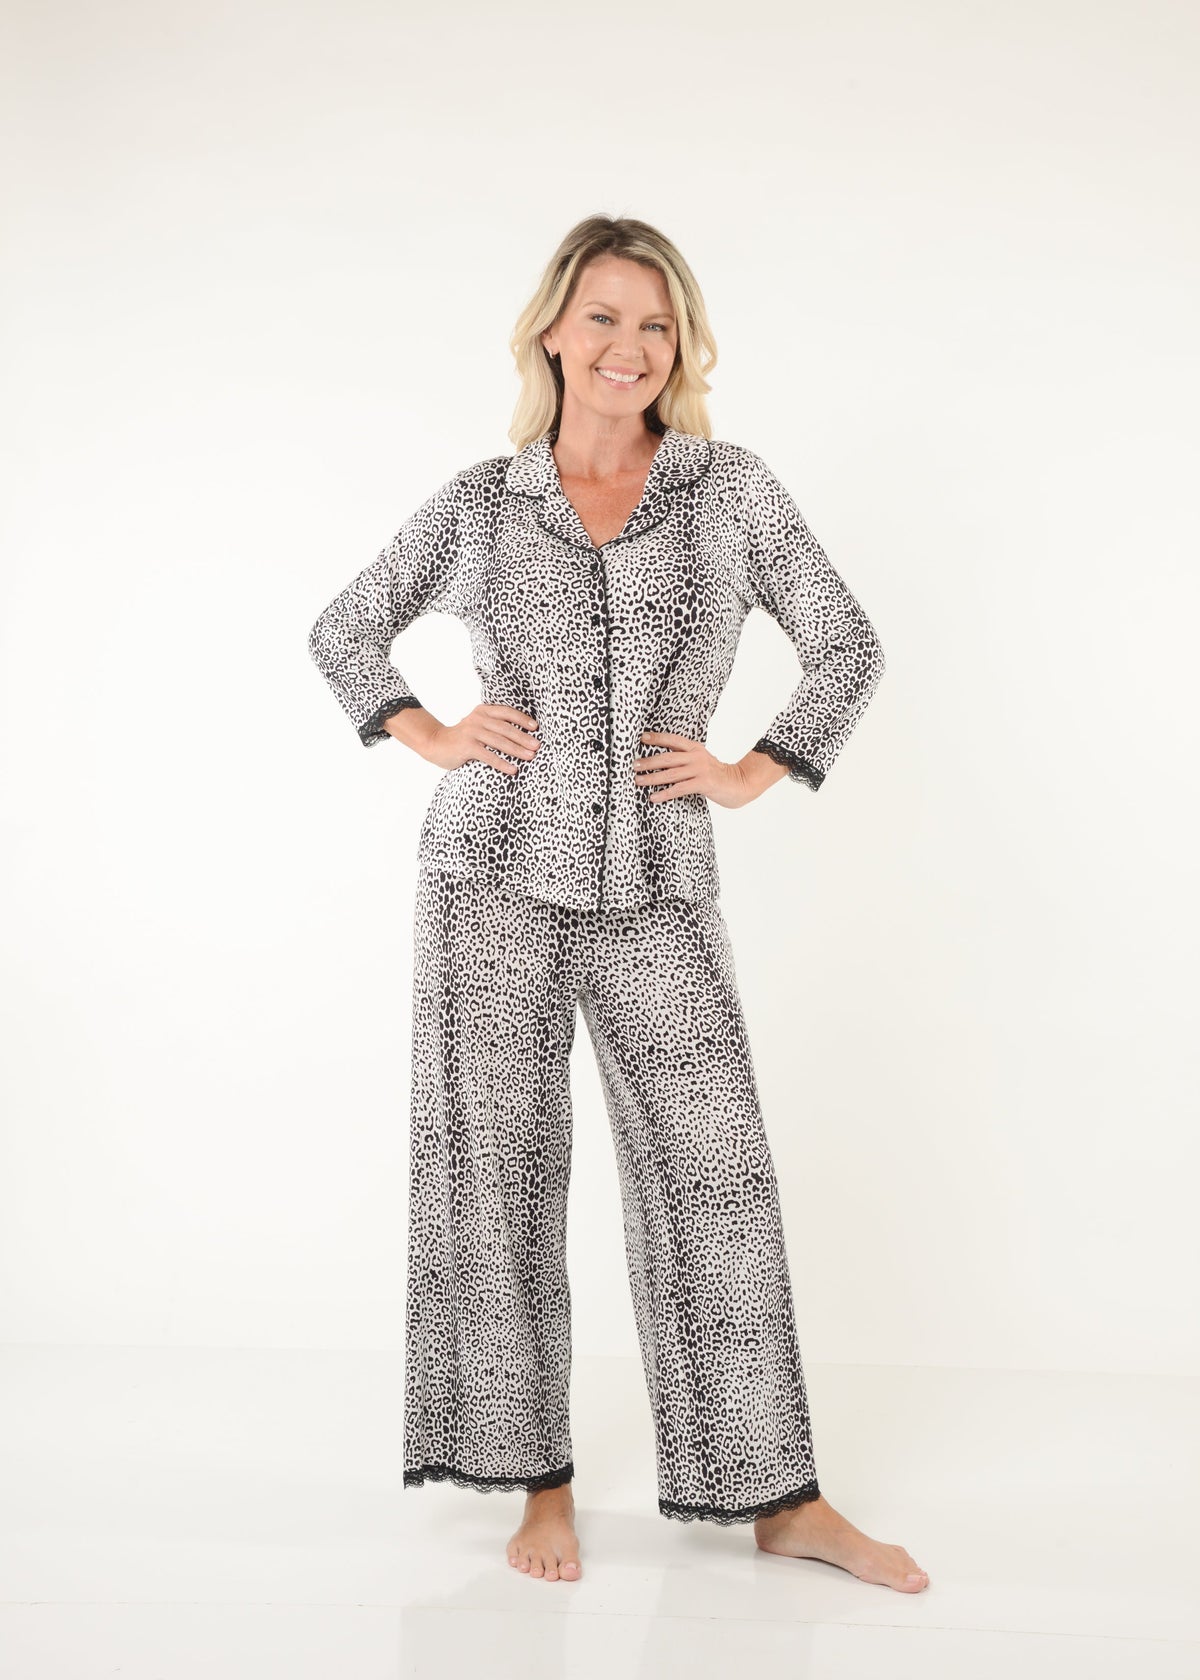 AherBiu Warm Pajama Sets for Women 2 Piece Built in Bra Tops with Pants  Sleepwear Homewear Pjs Set 